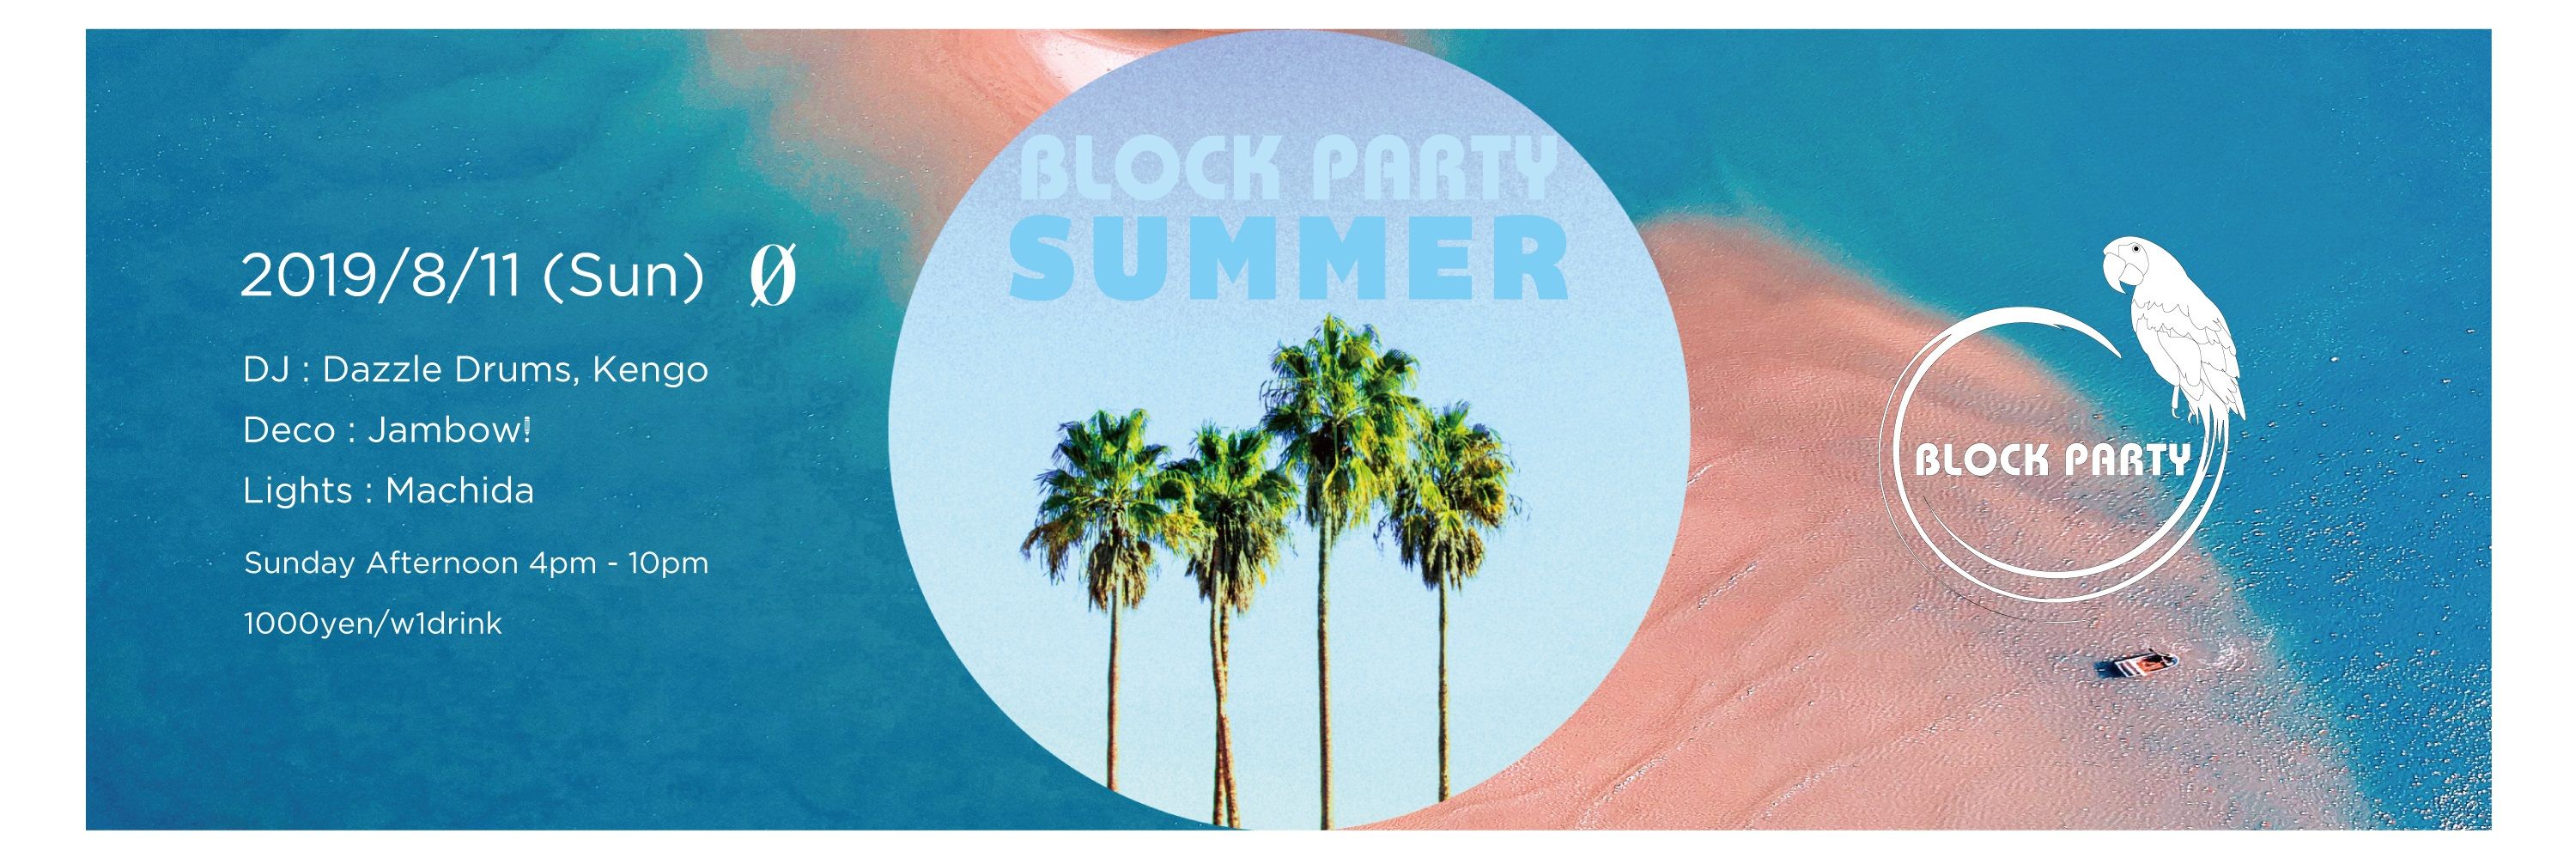 Block Party "Summer 2019" 